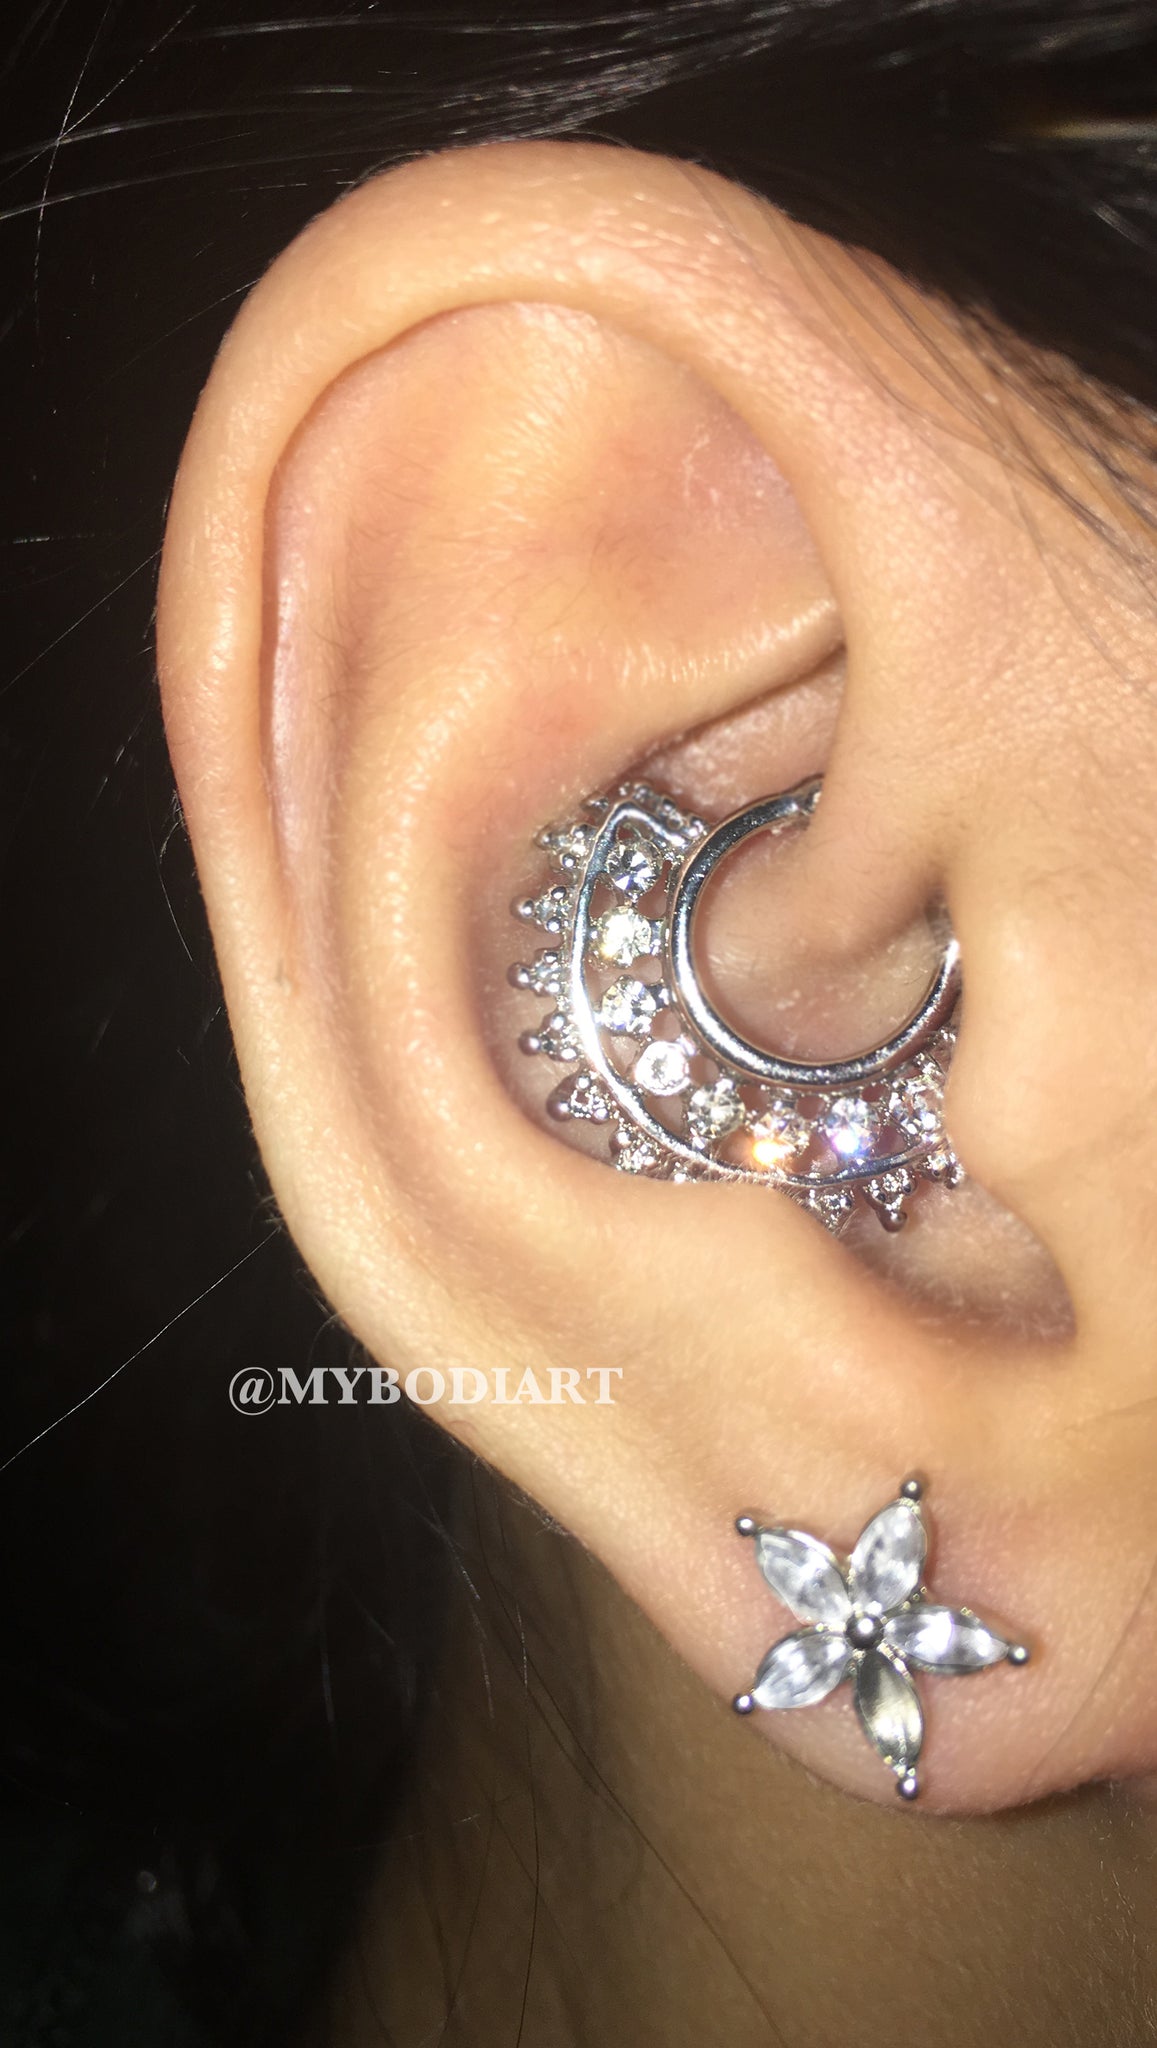 Unique Ear Piercing Ideas Cartilage for Teens Silver Daith Ring Crystal Flower Earring Stud - www.MyBodiArt.com